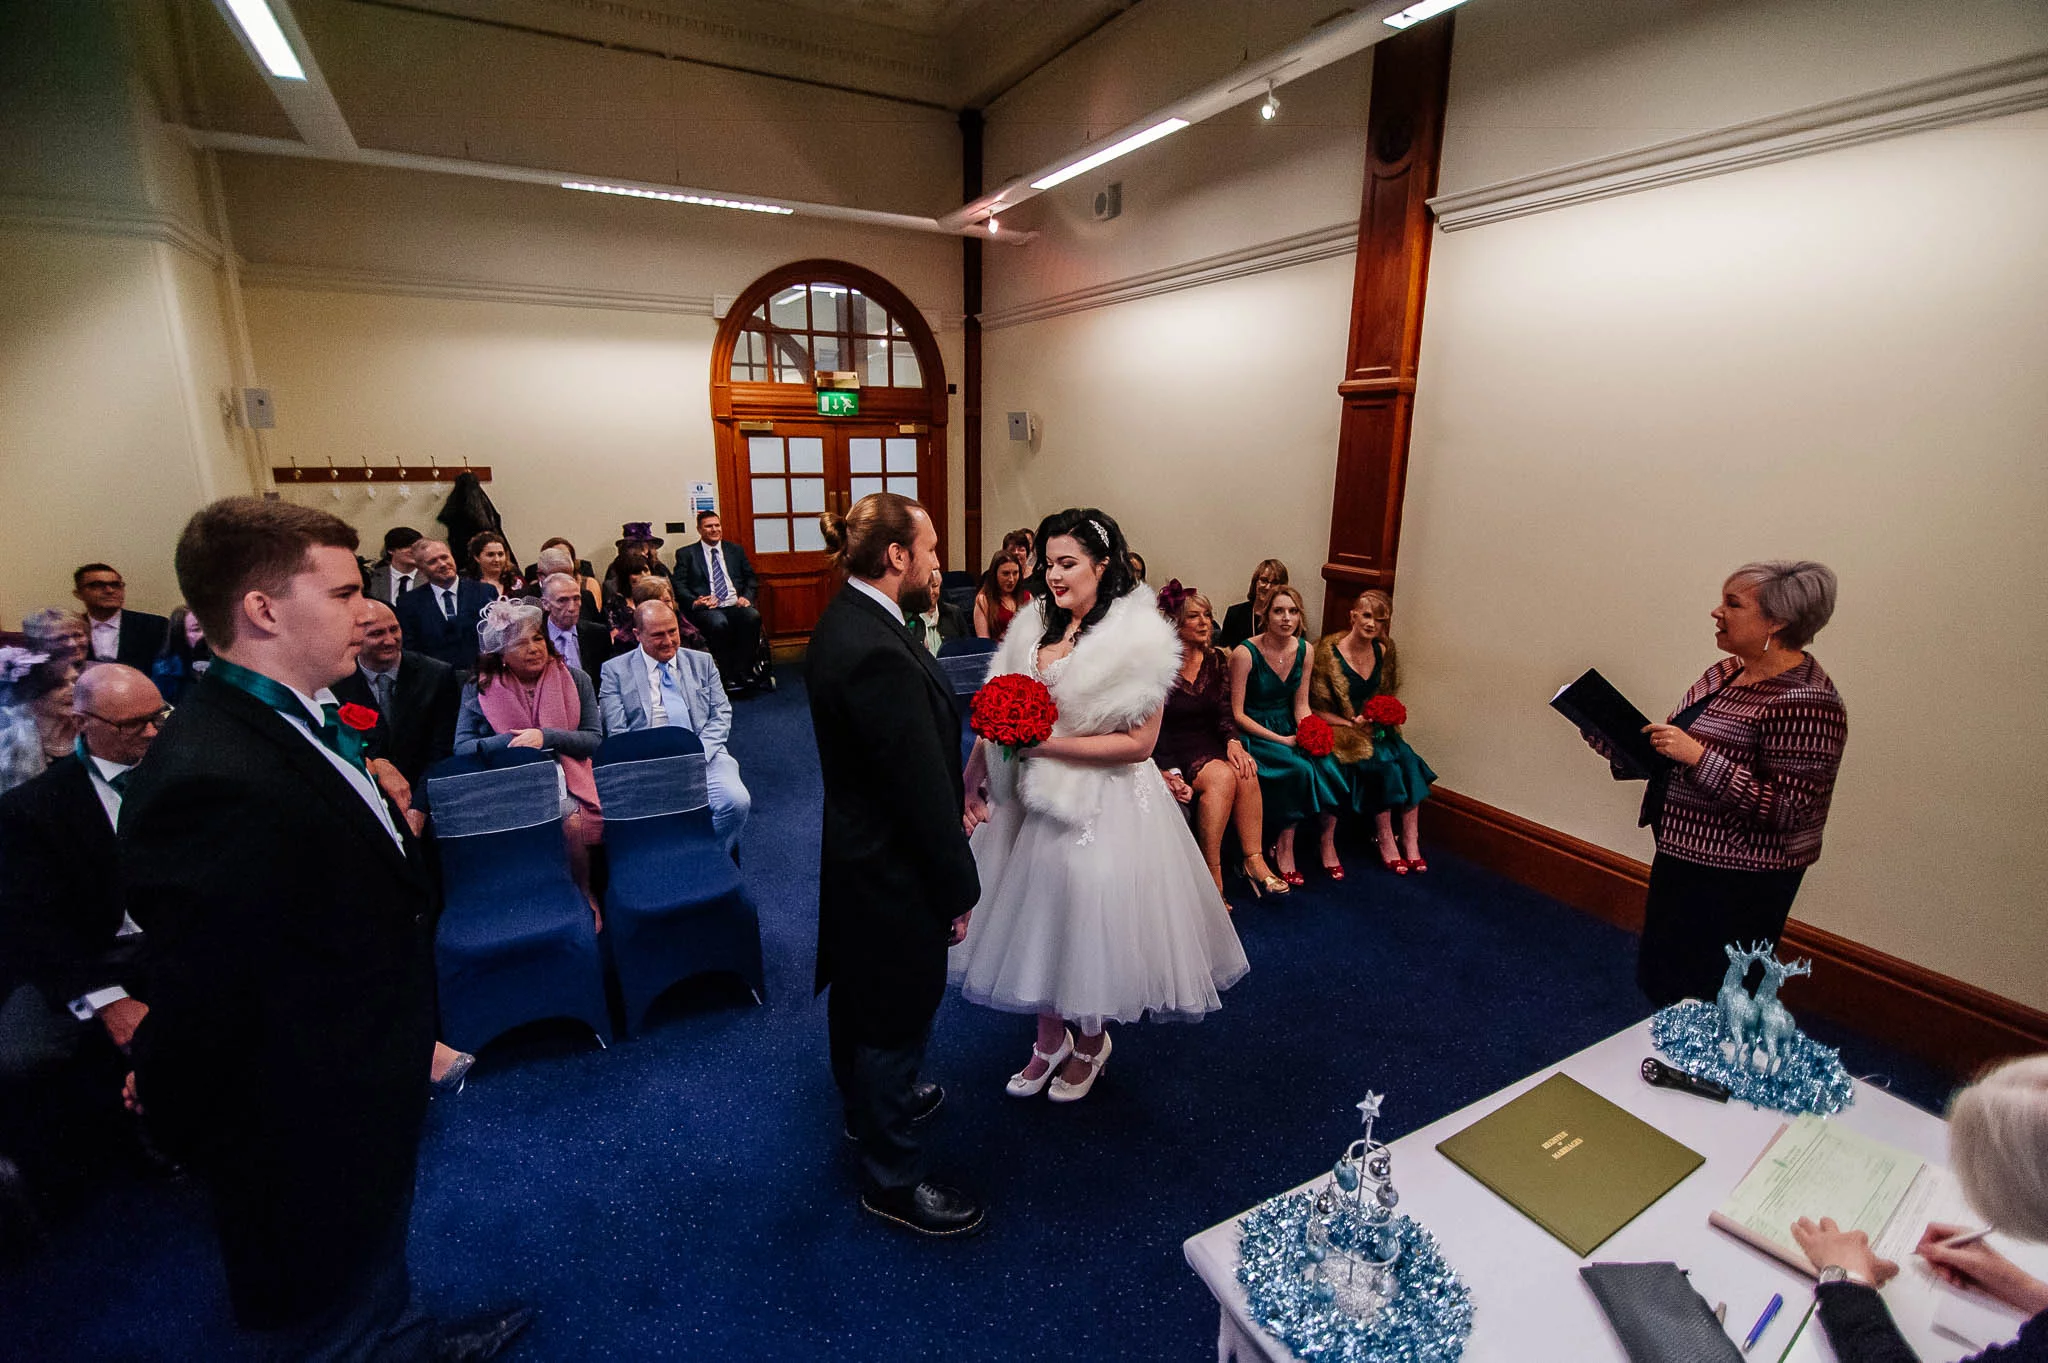 Sheffield Town Hall wedding ceremony